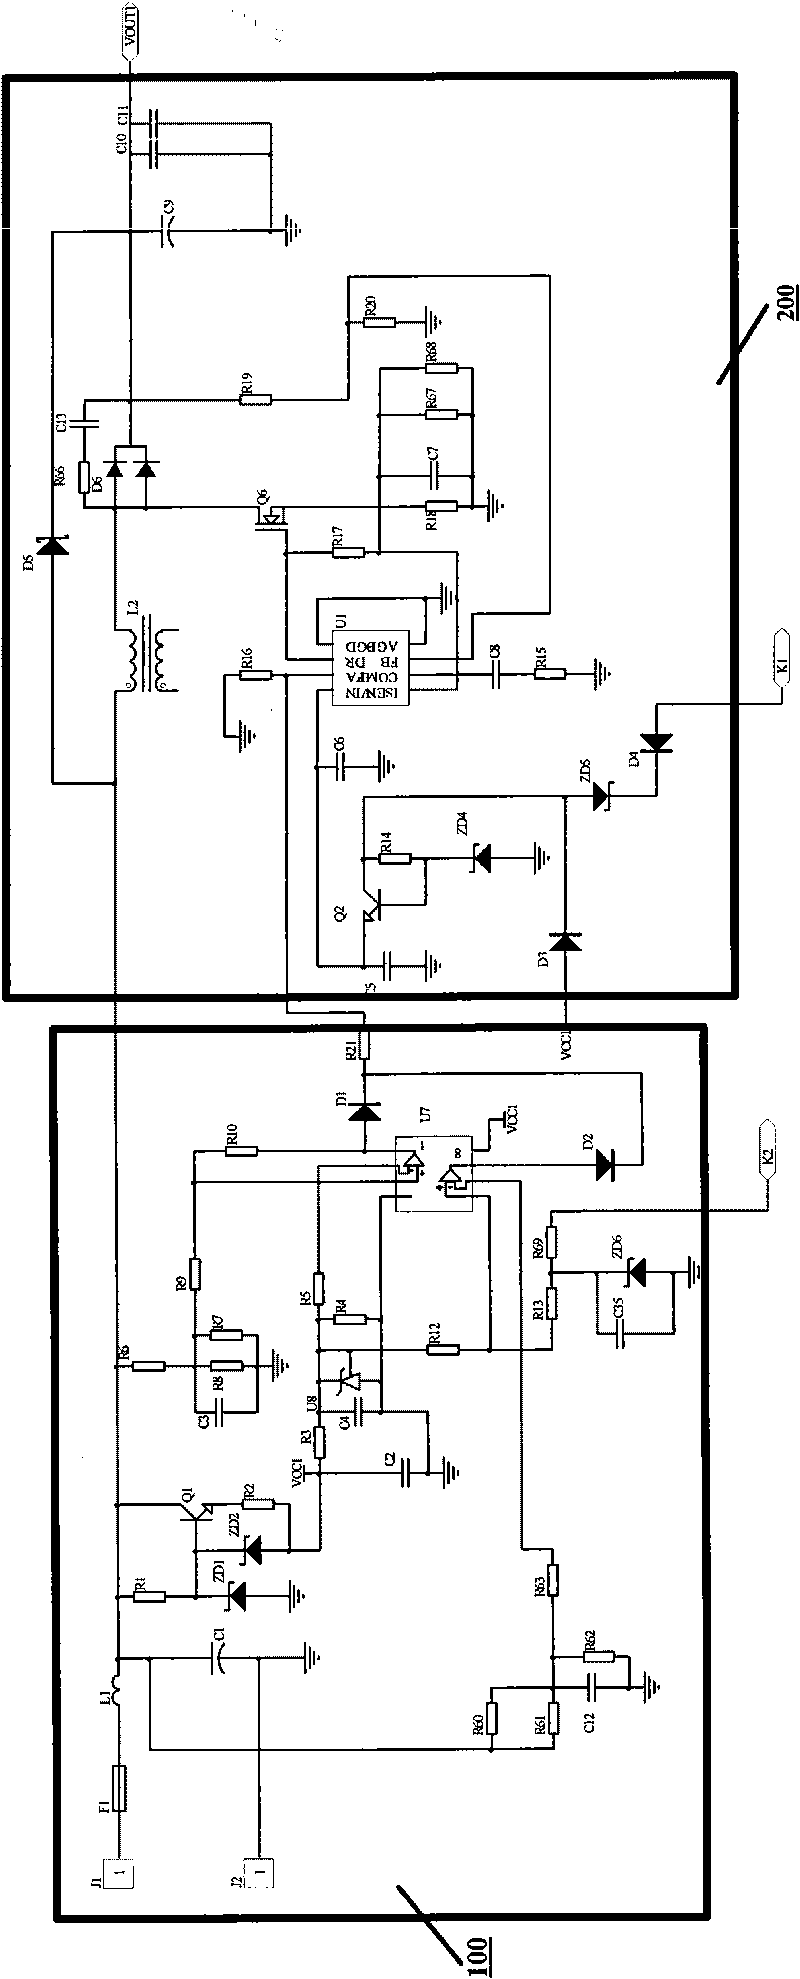 LED direct-current input control circuit